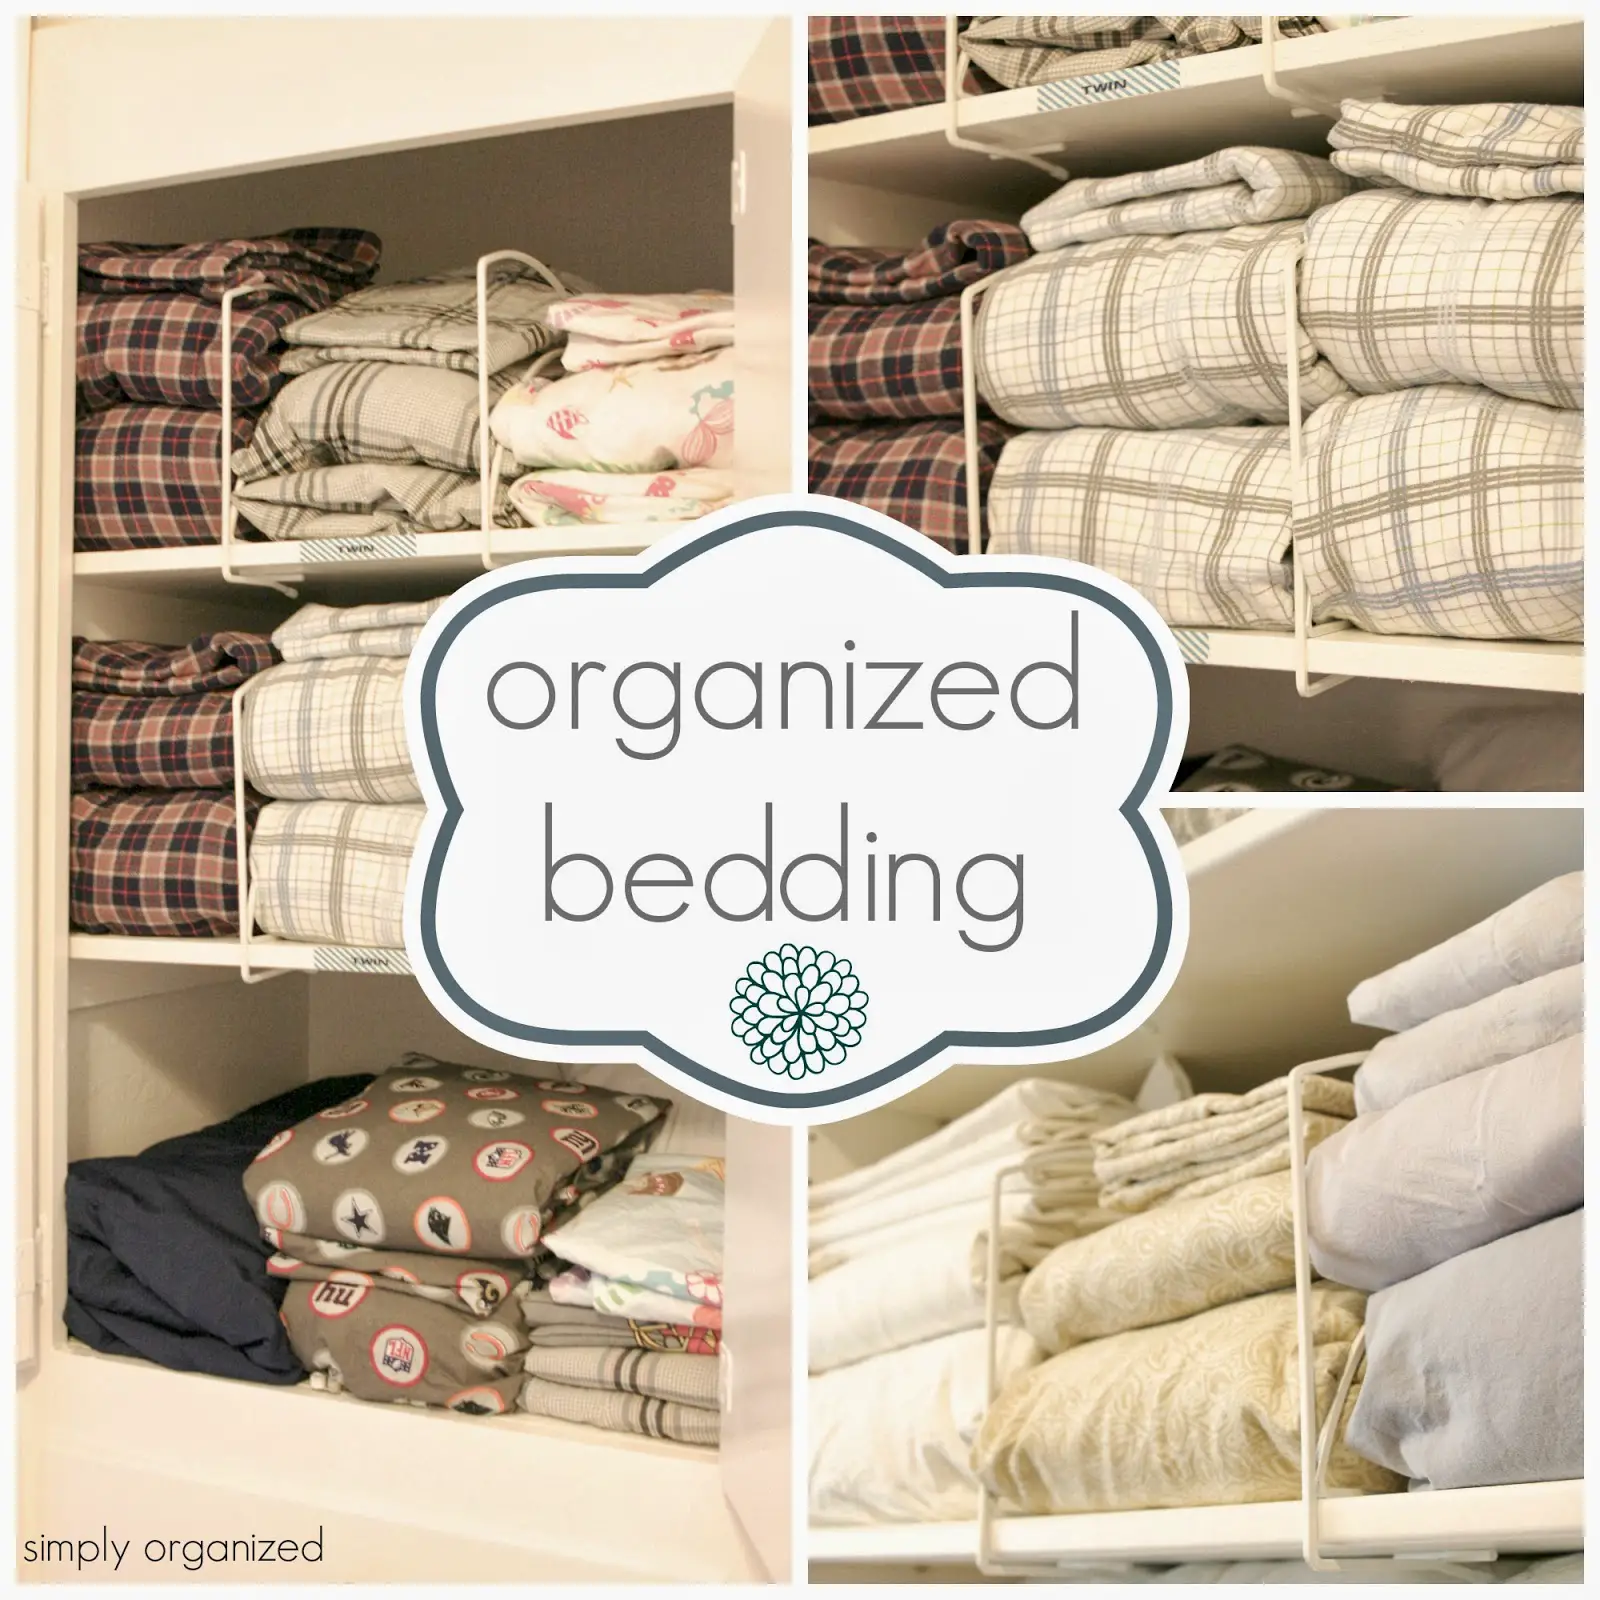 Home Improvement: organized bedding